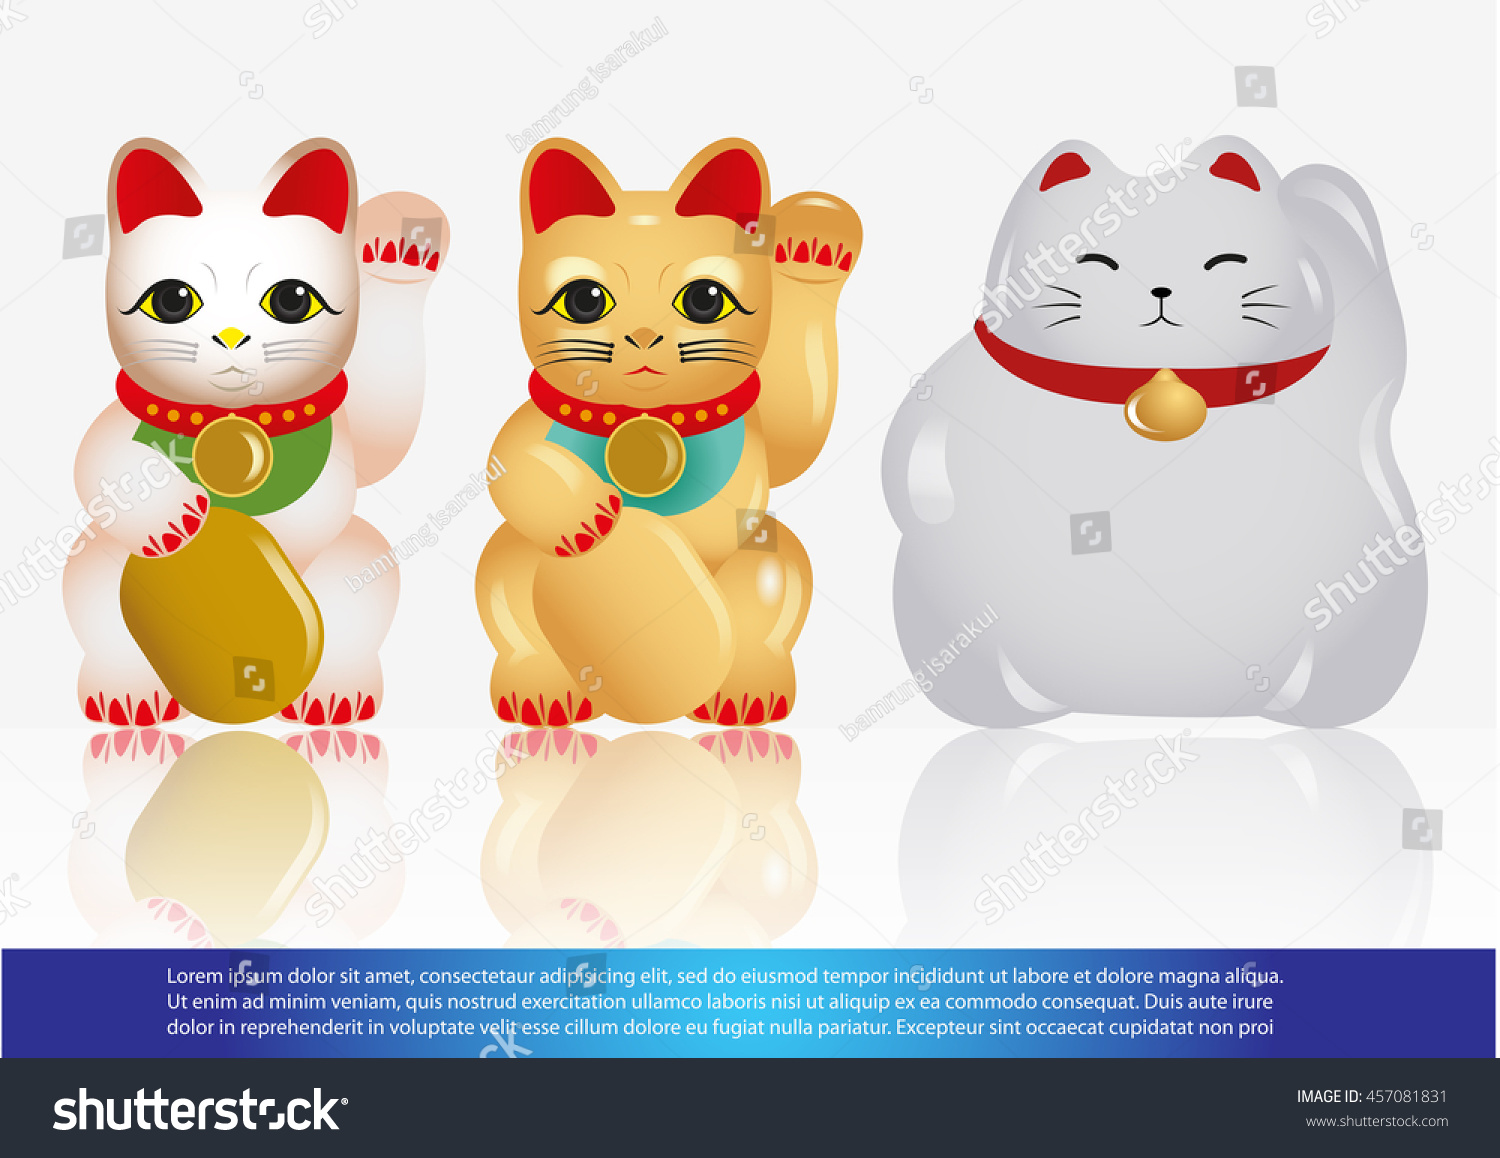 SVG of Japanese lucky cat ,maneki neko lucky cat japan.vector illustration svg